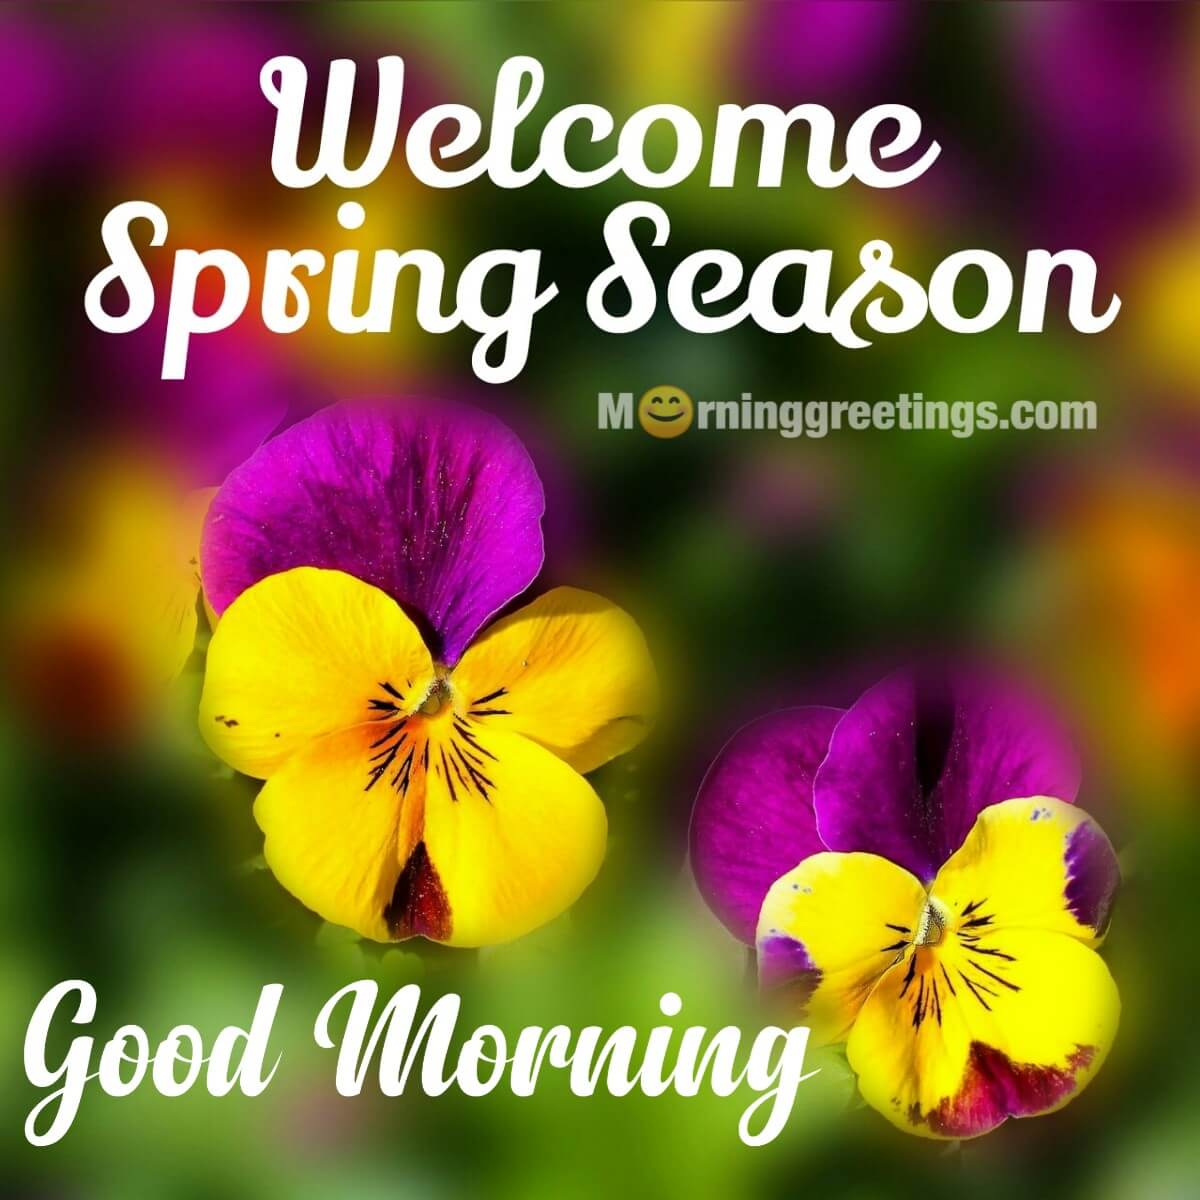 Good Morning Welcome Spring Season